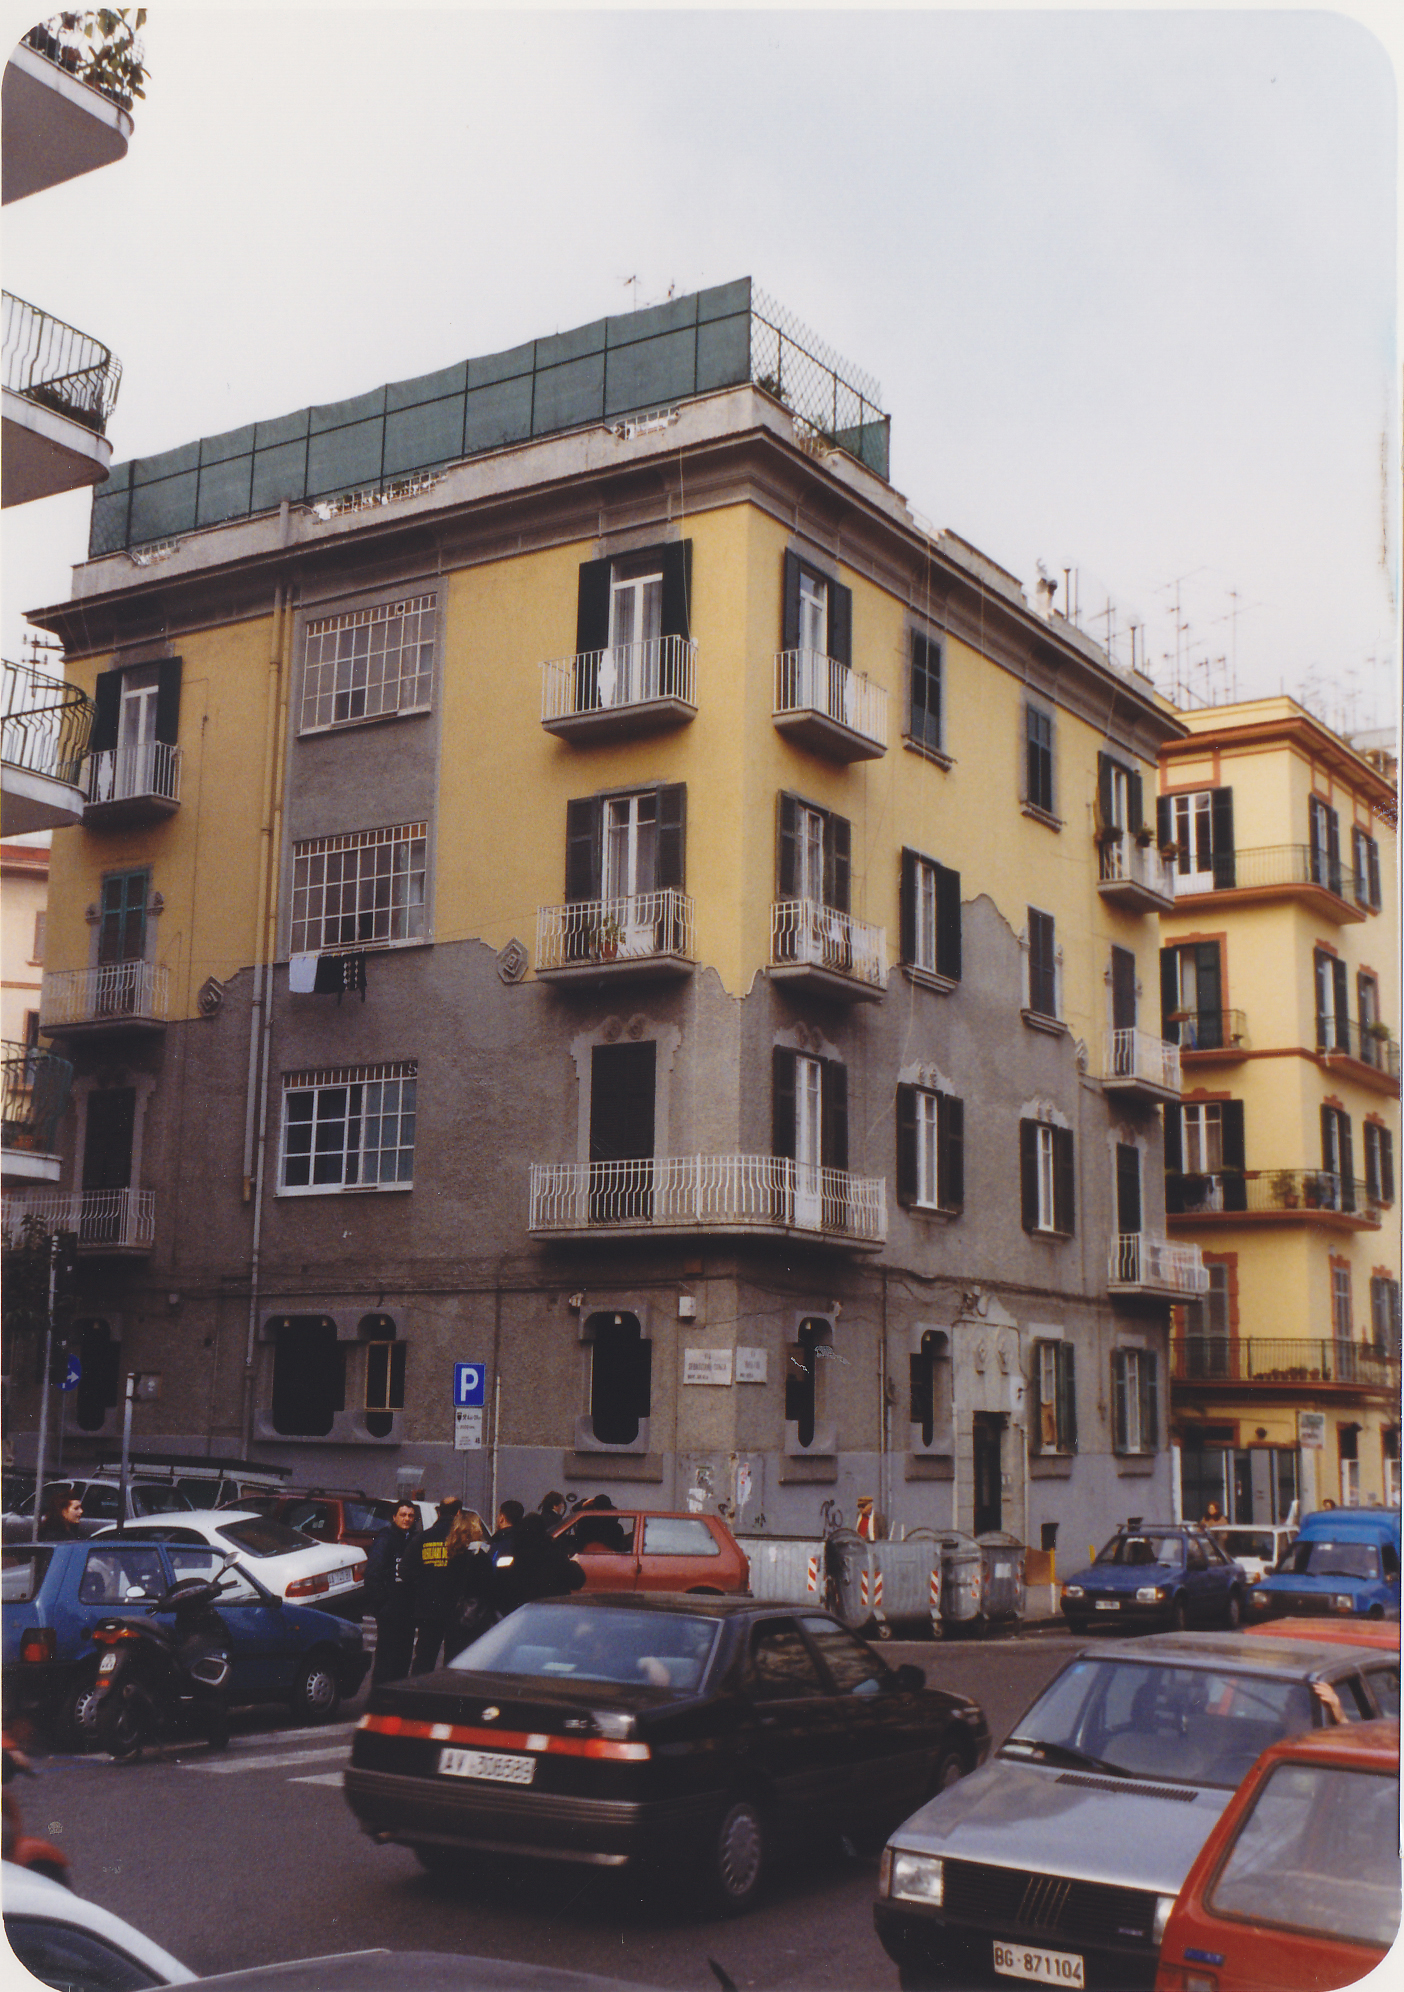 ignota - via Mario Fiore, 49 (palazzina, plurifamilliare) - Napoli (NA) 